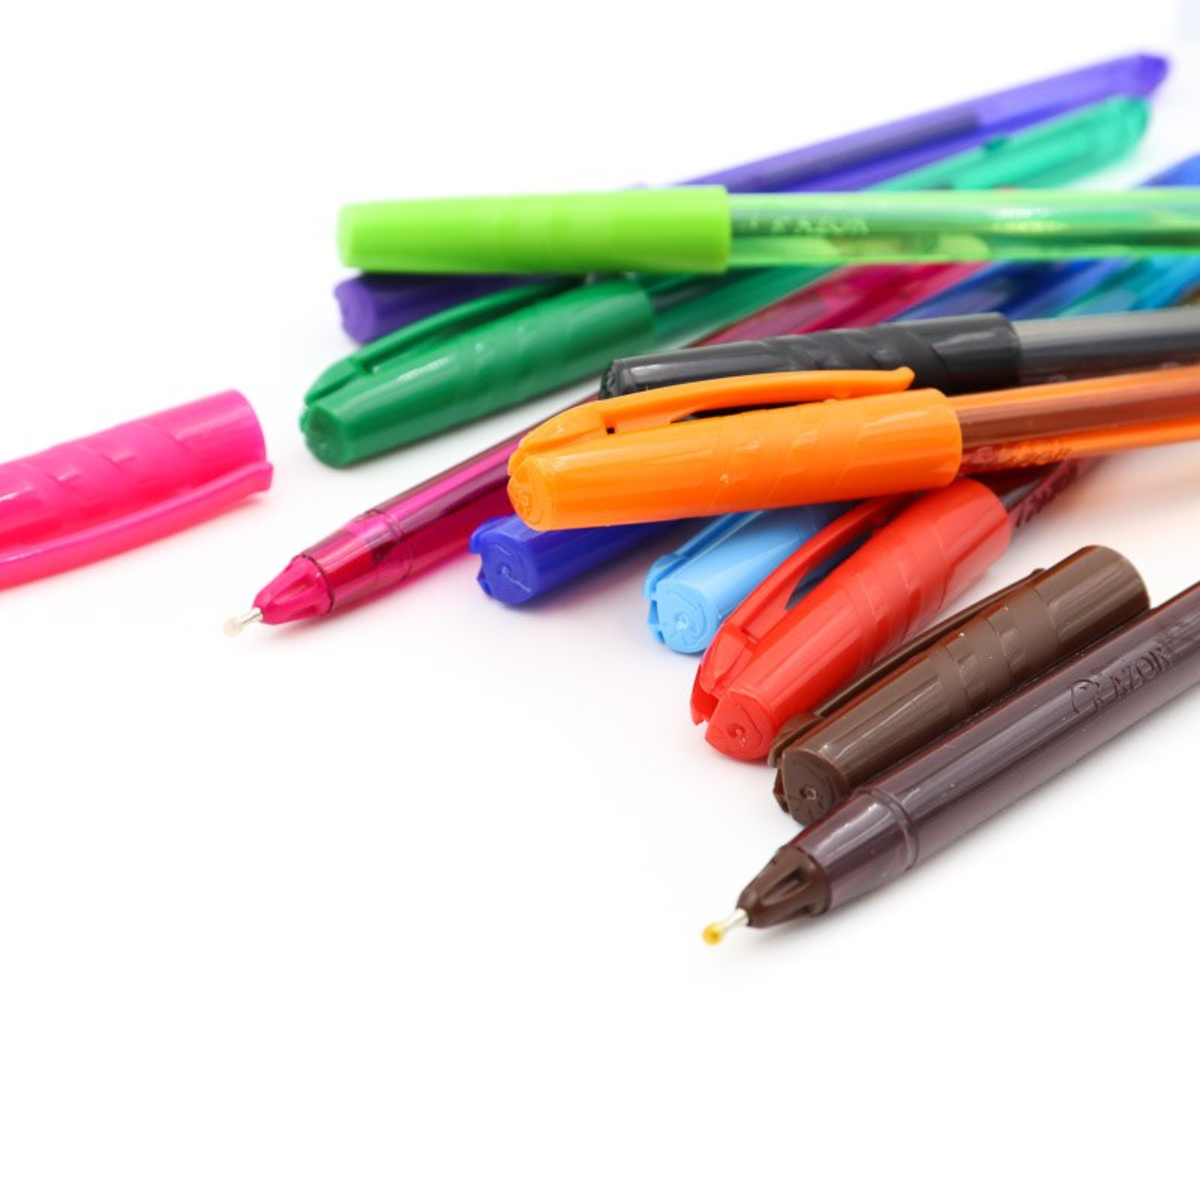 Bolígrafos Plumas Azor Pin Point Mandala Colores 0.7mm 10 Piezas